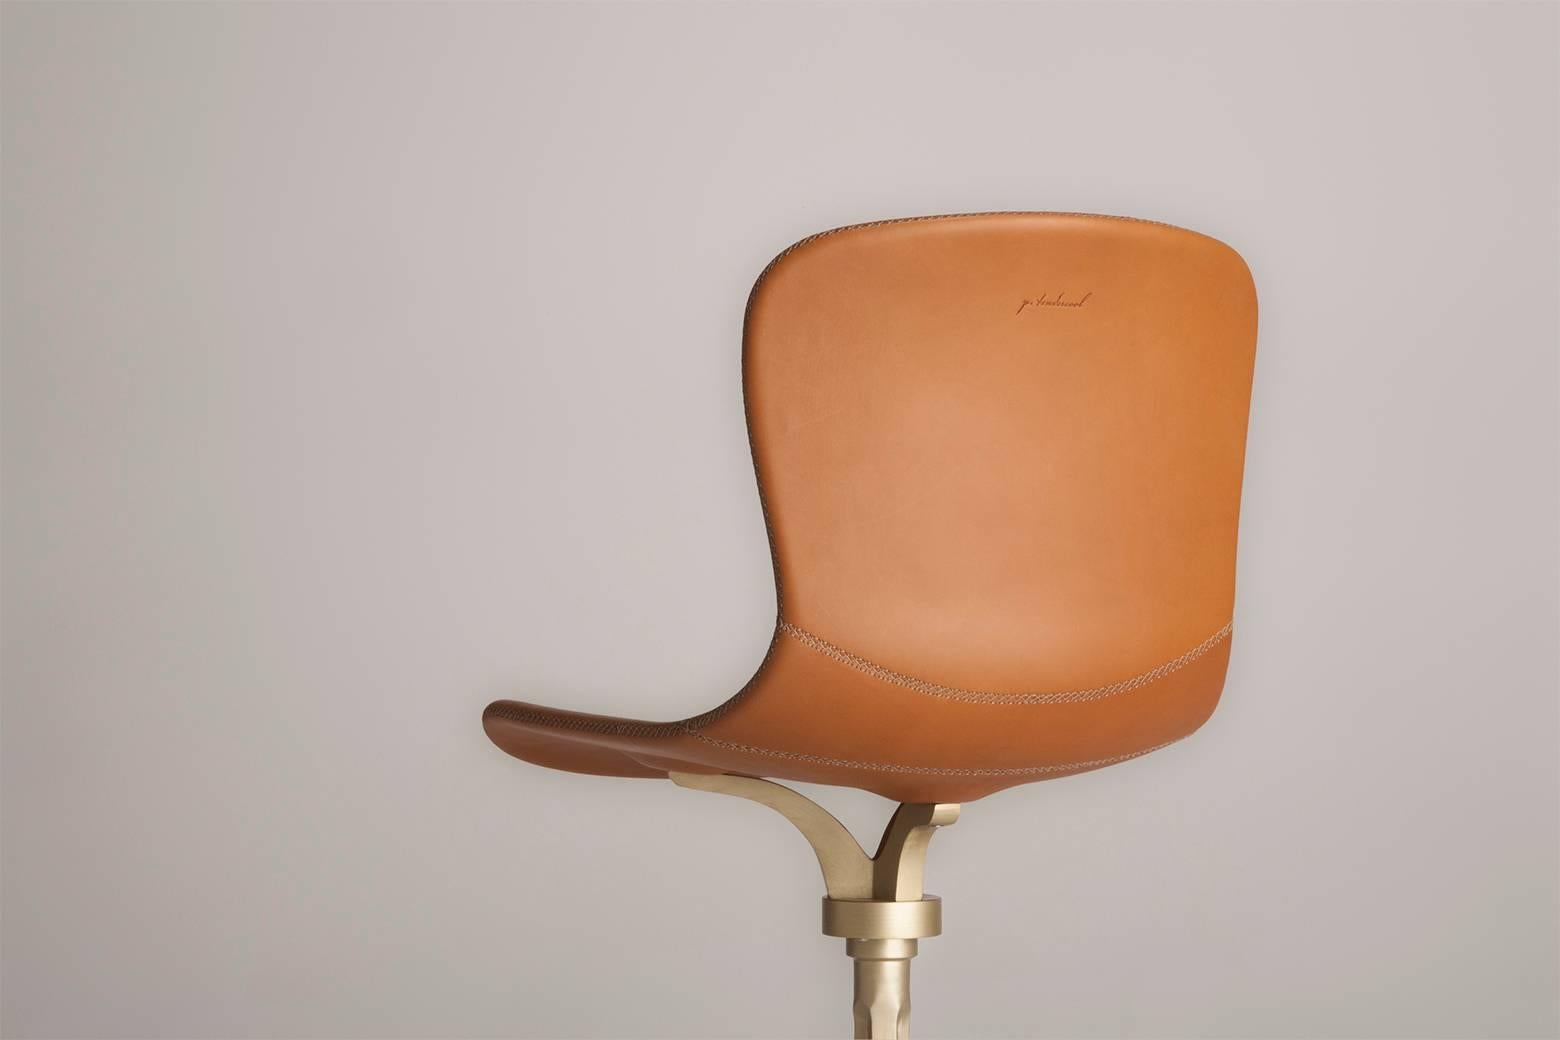 Model: PT43 BS1 Châtaigne
Seat: Leather
Seat Color: Châtaigne
Base: BS1 Sand cast brass
Base finish: Brushed golden sand
Dimensions: 52 x 50 x 81 cm; Seat height 46 cm 
(w x d x h) 20.5 x 19.6 x 31.89 inch; Seat height 18.1 inch

P. Tendercool